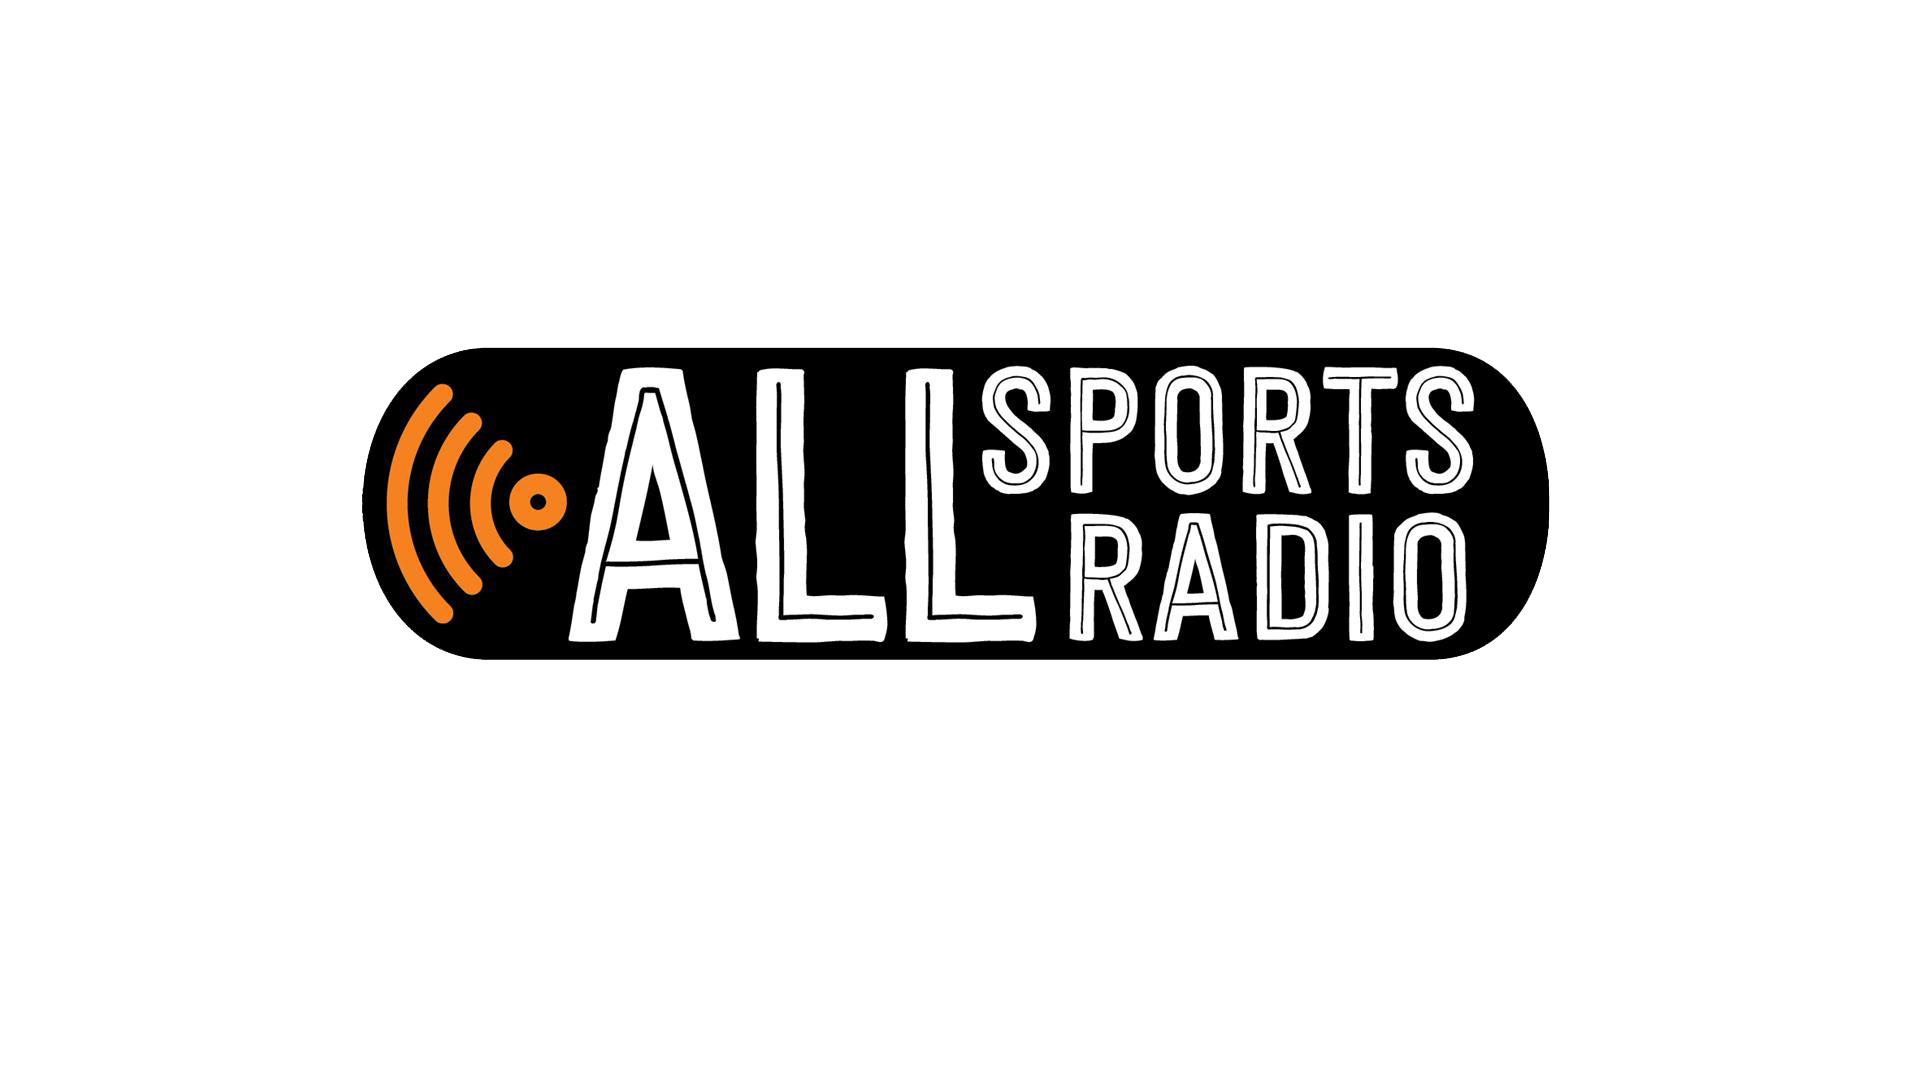 Allsportsradio logo.png